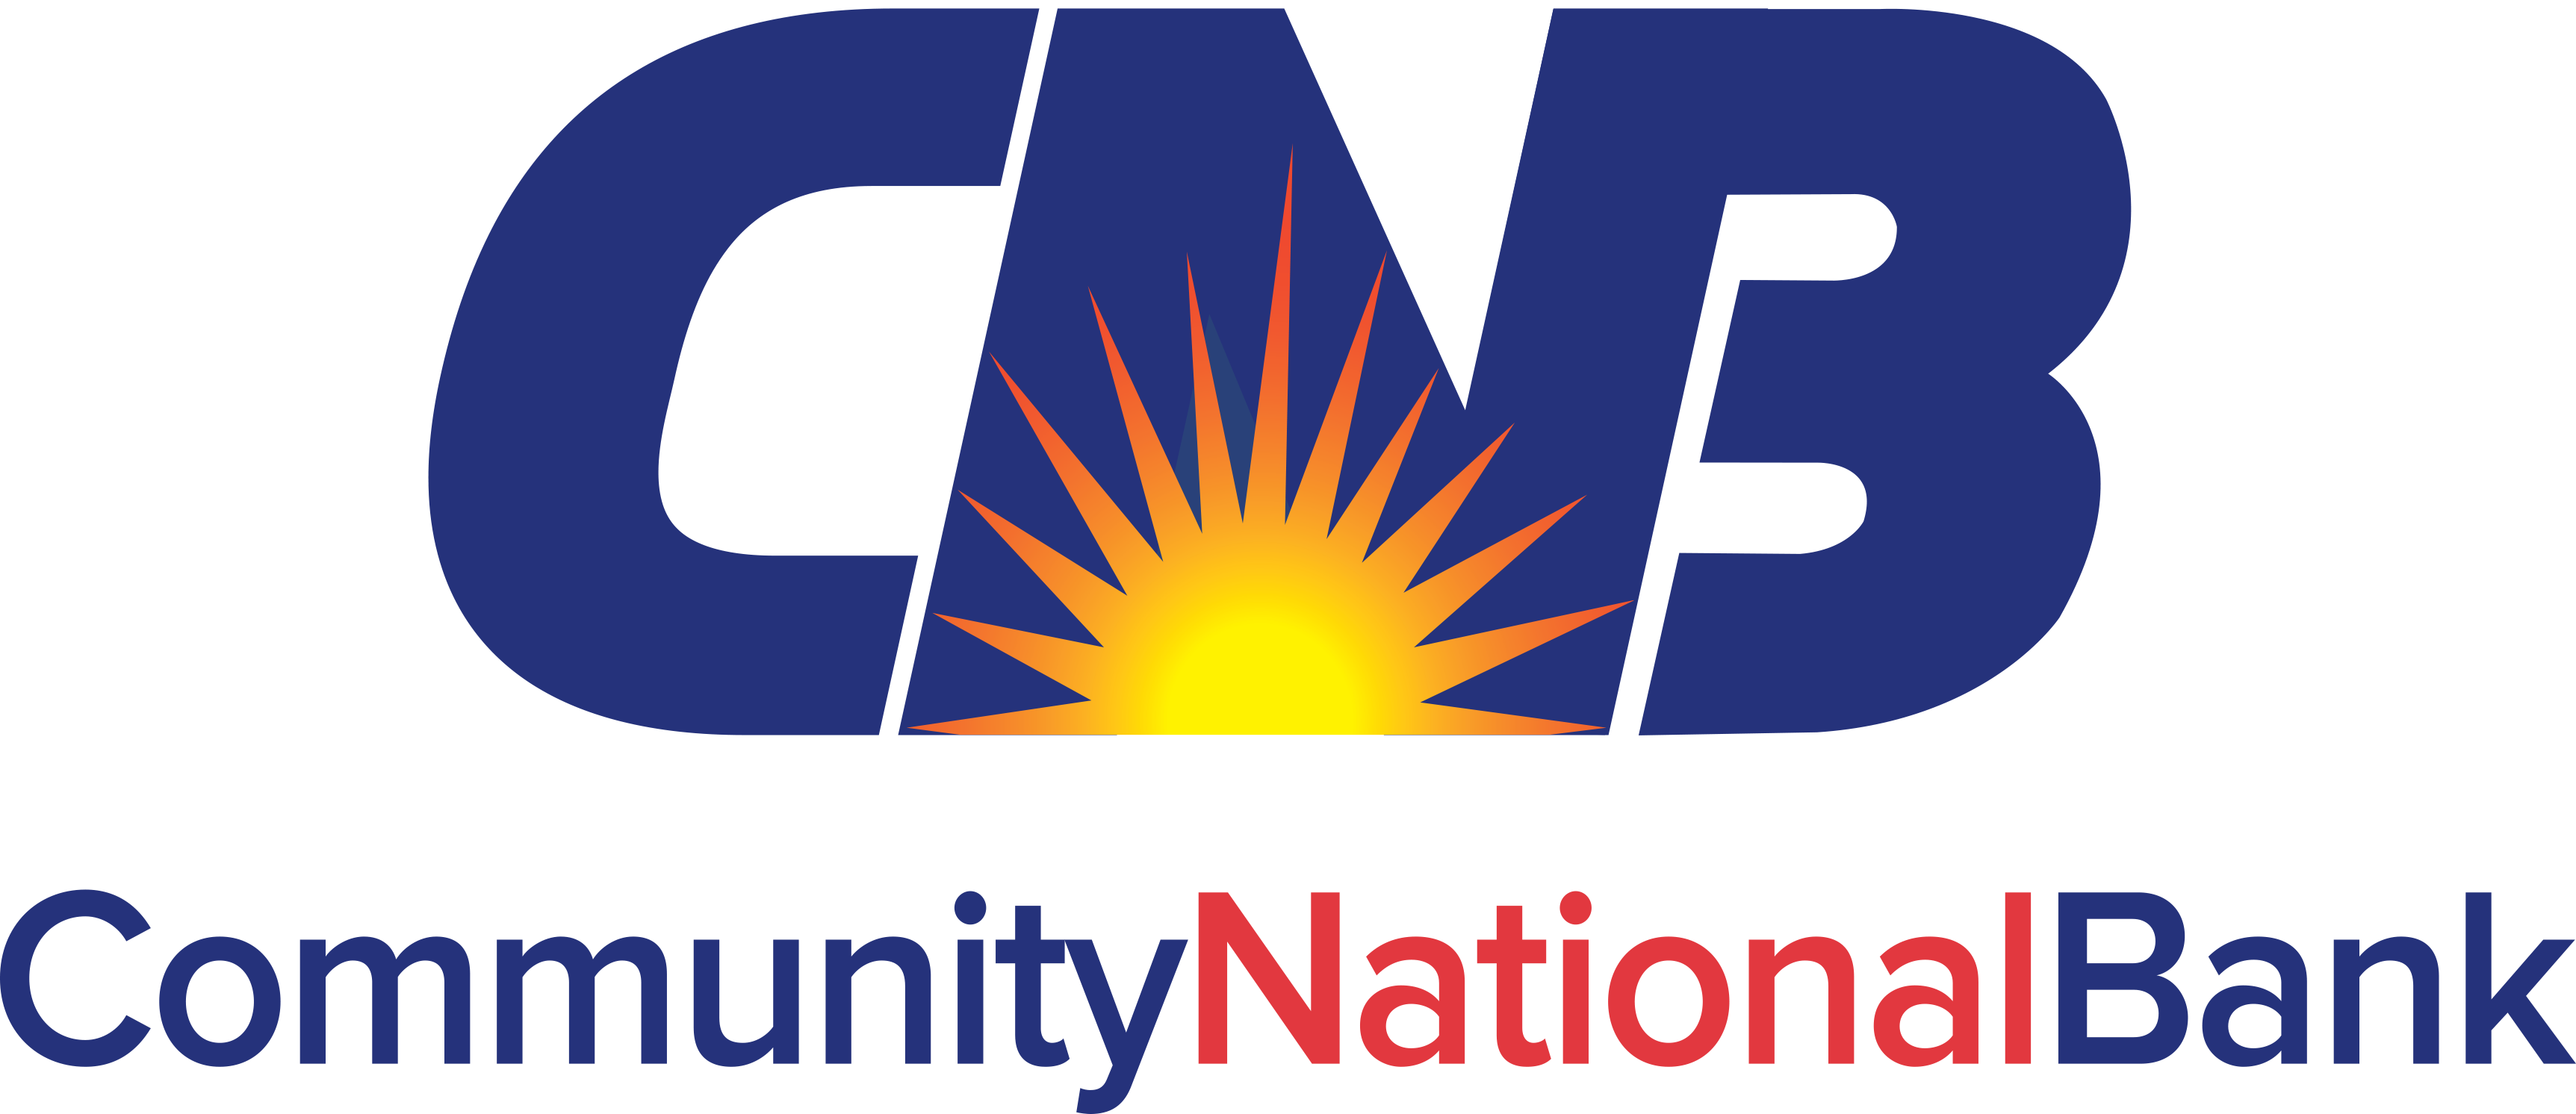 CNB revised logo